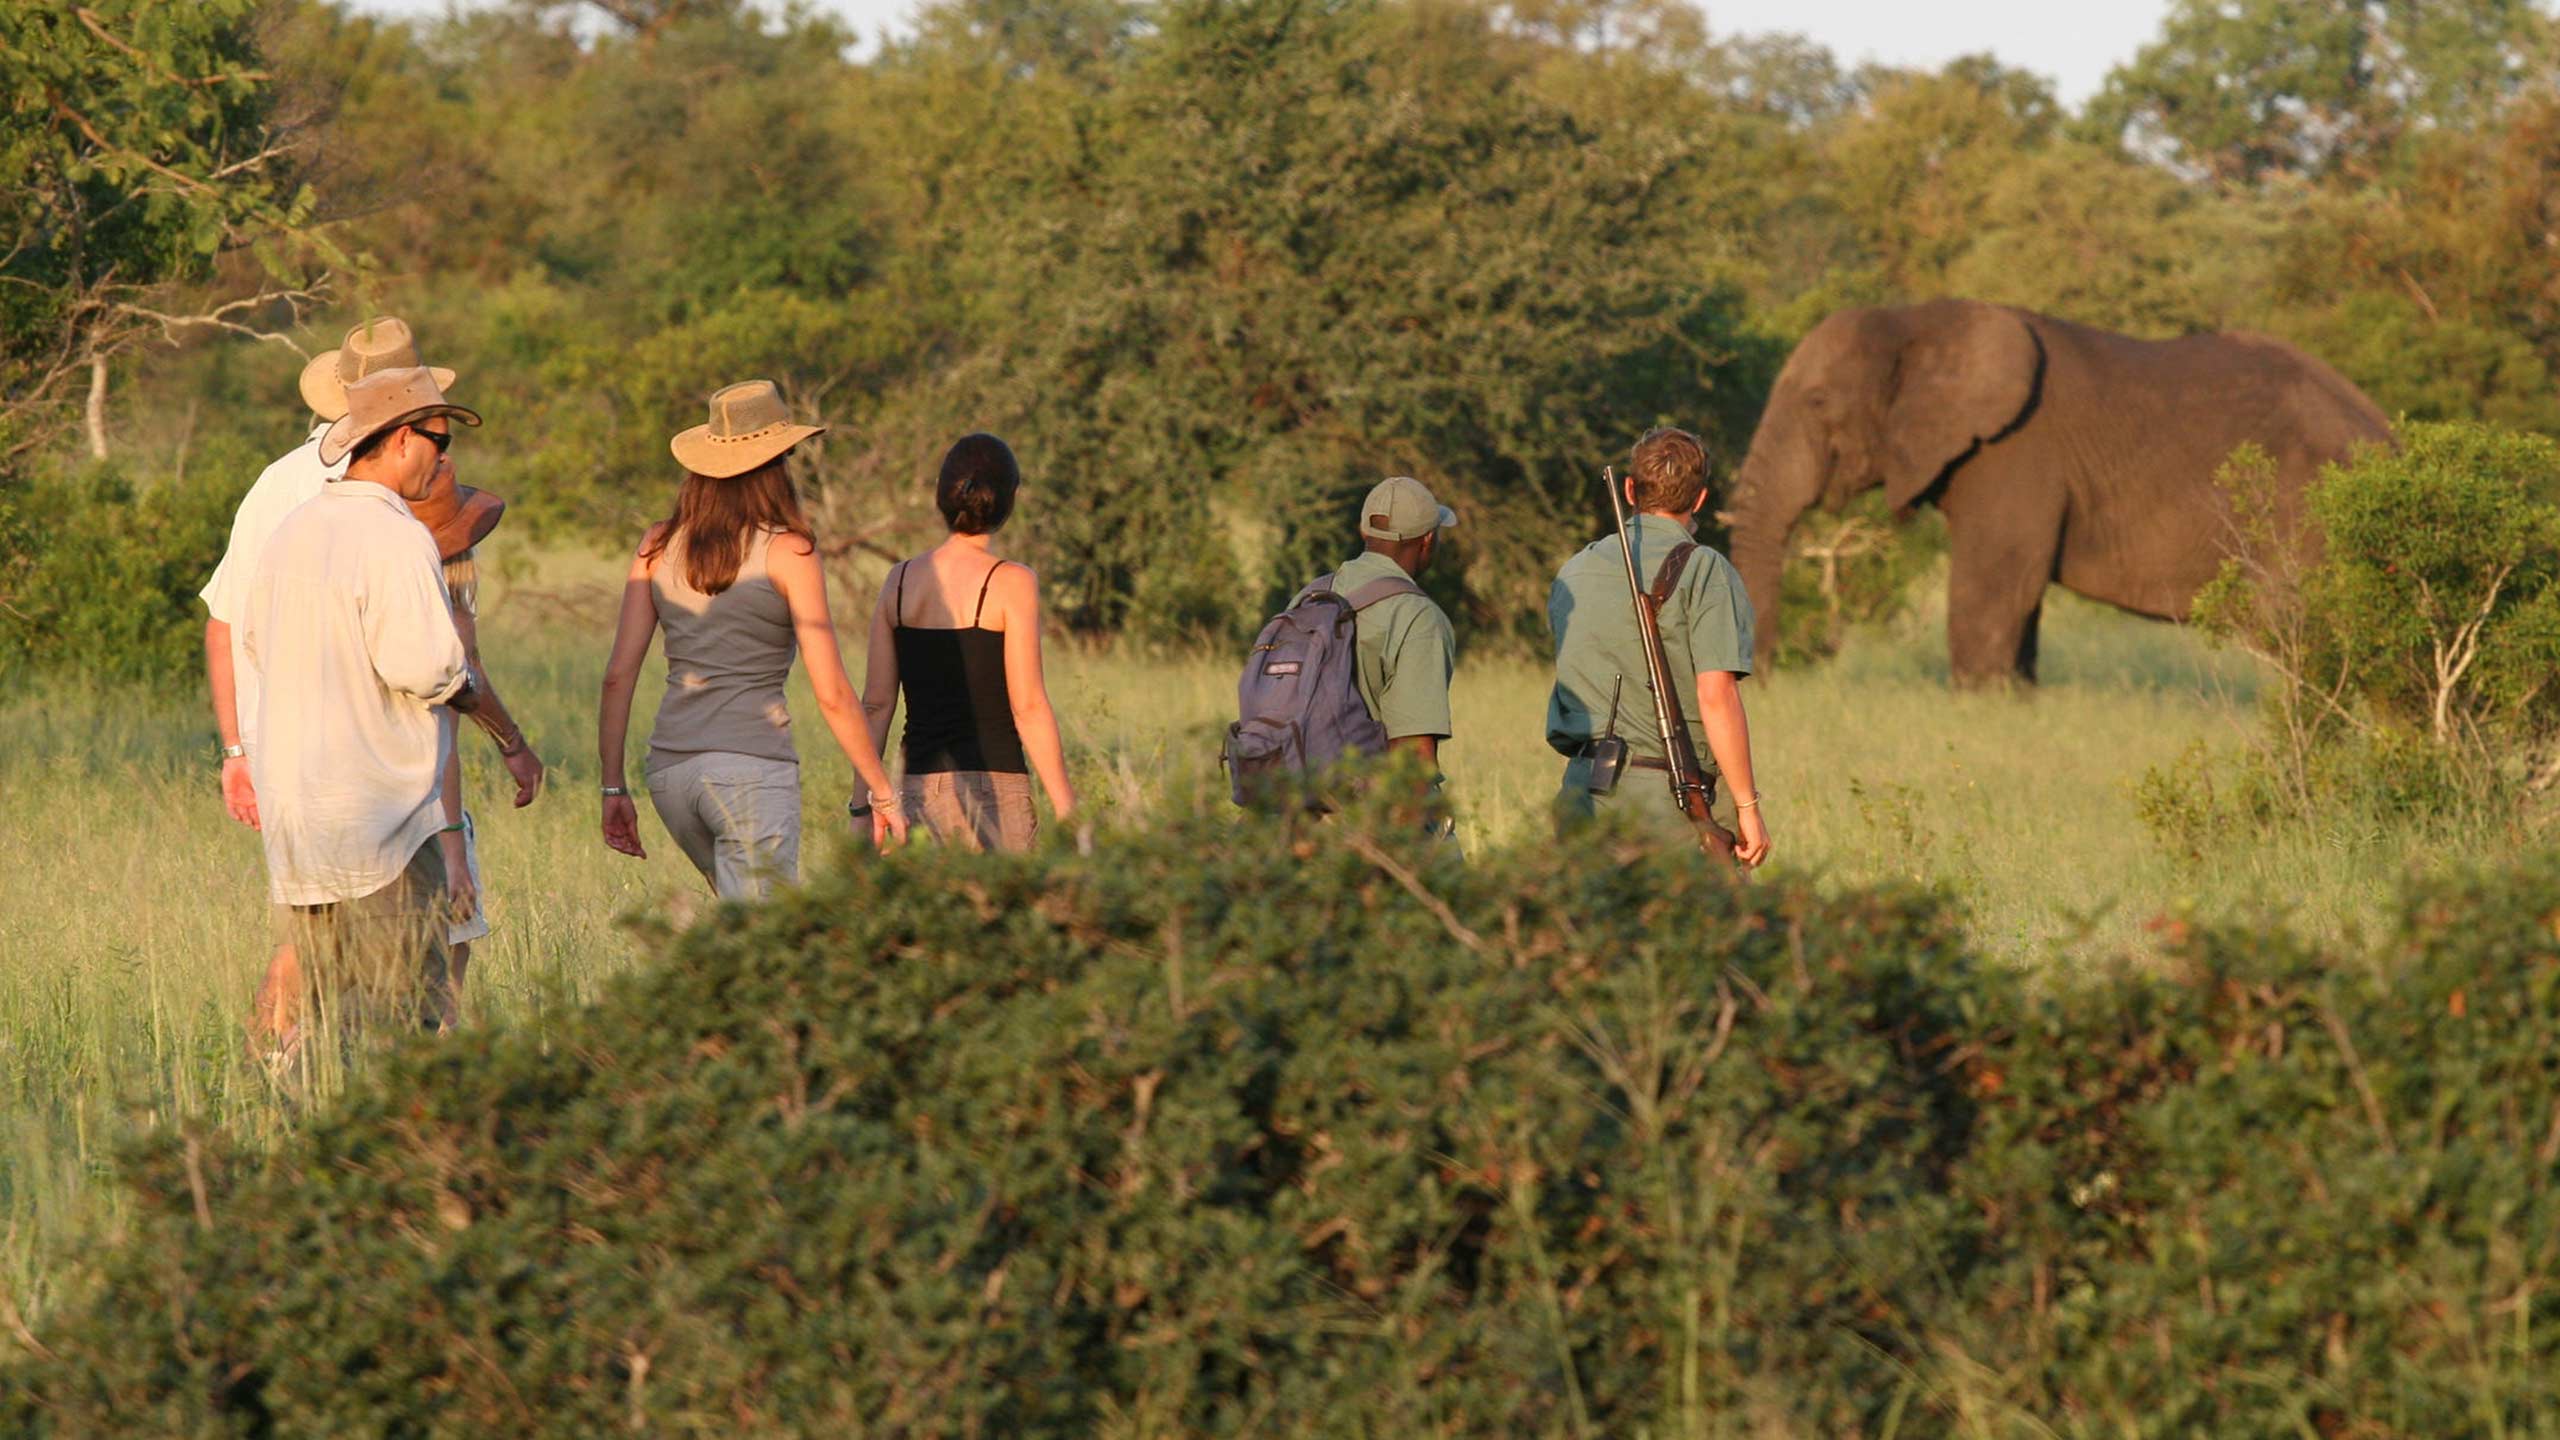 the-plains-camp-home-of-rhino-walking-safari-south-africa-tourists-elephant